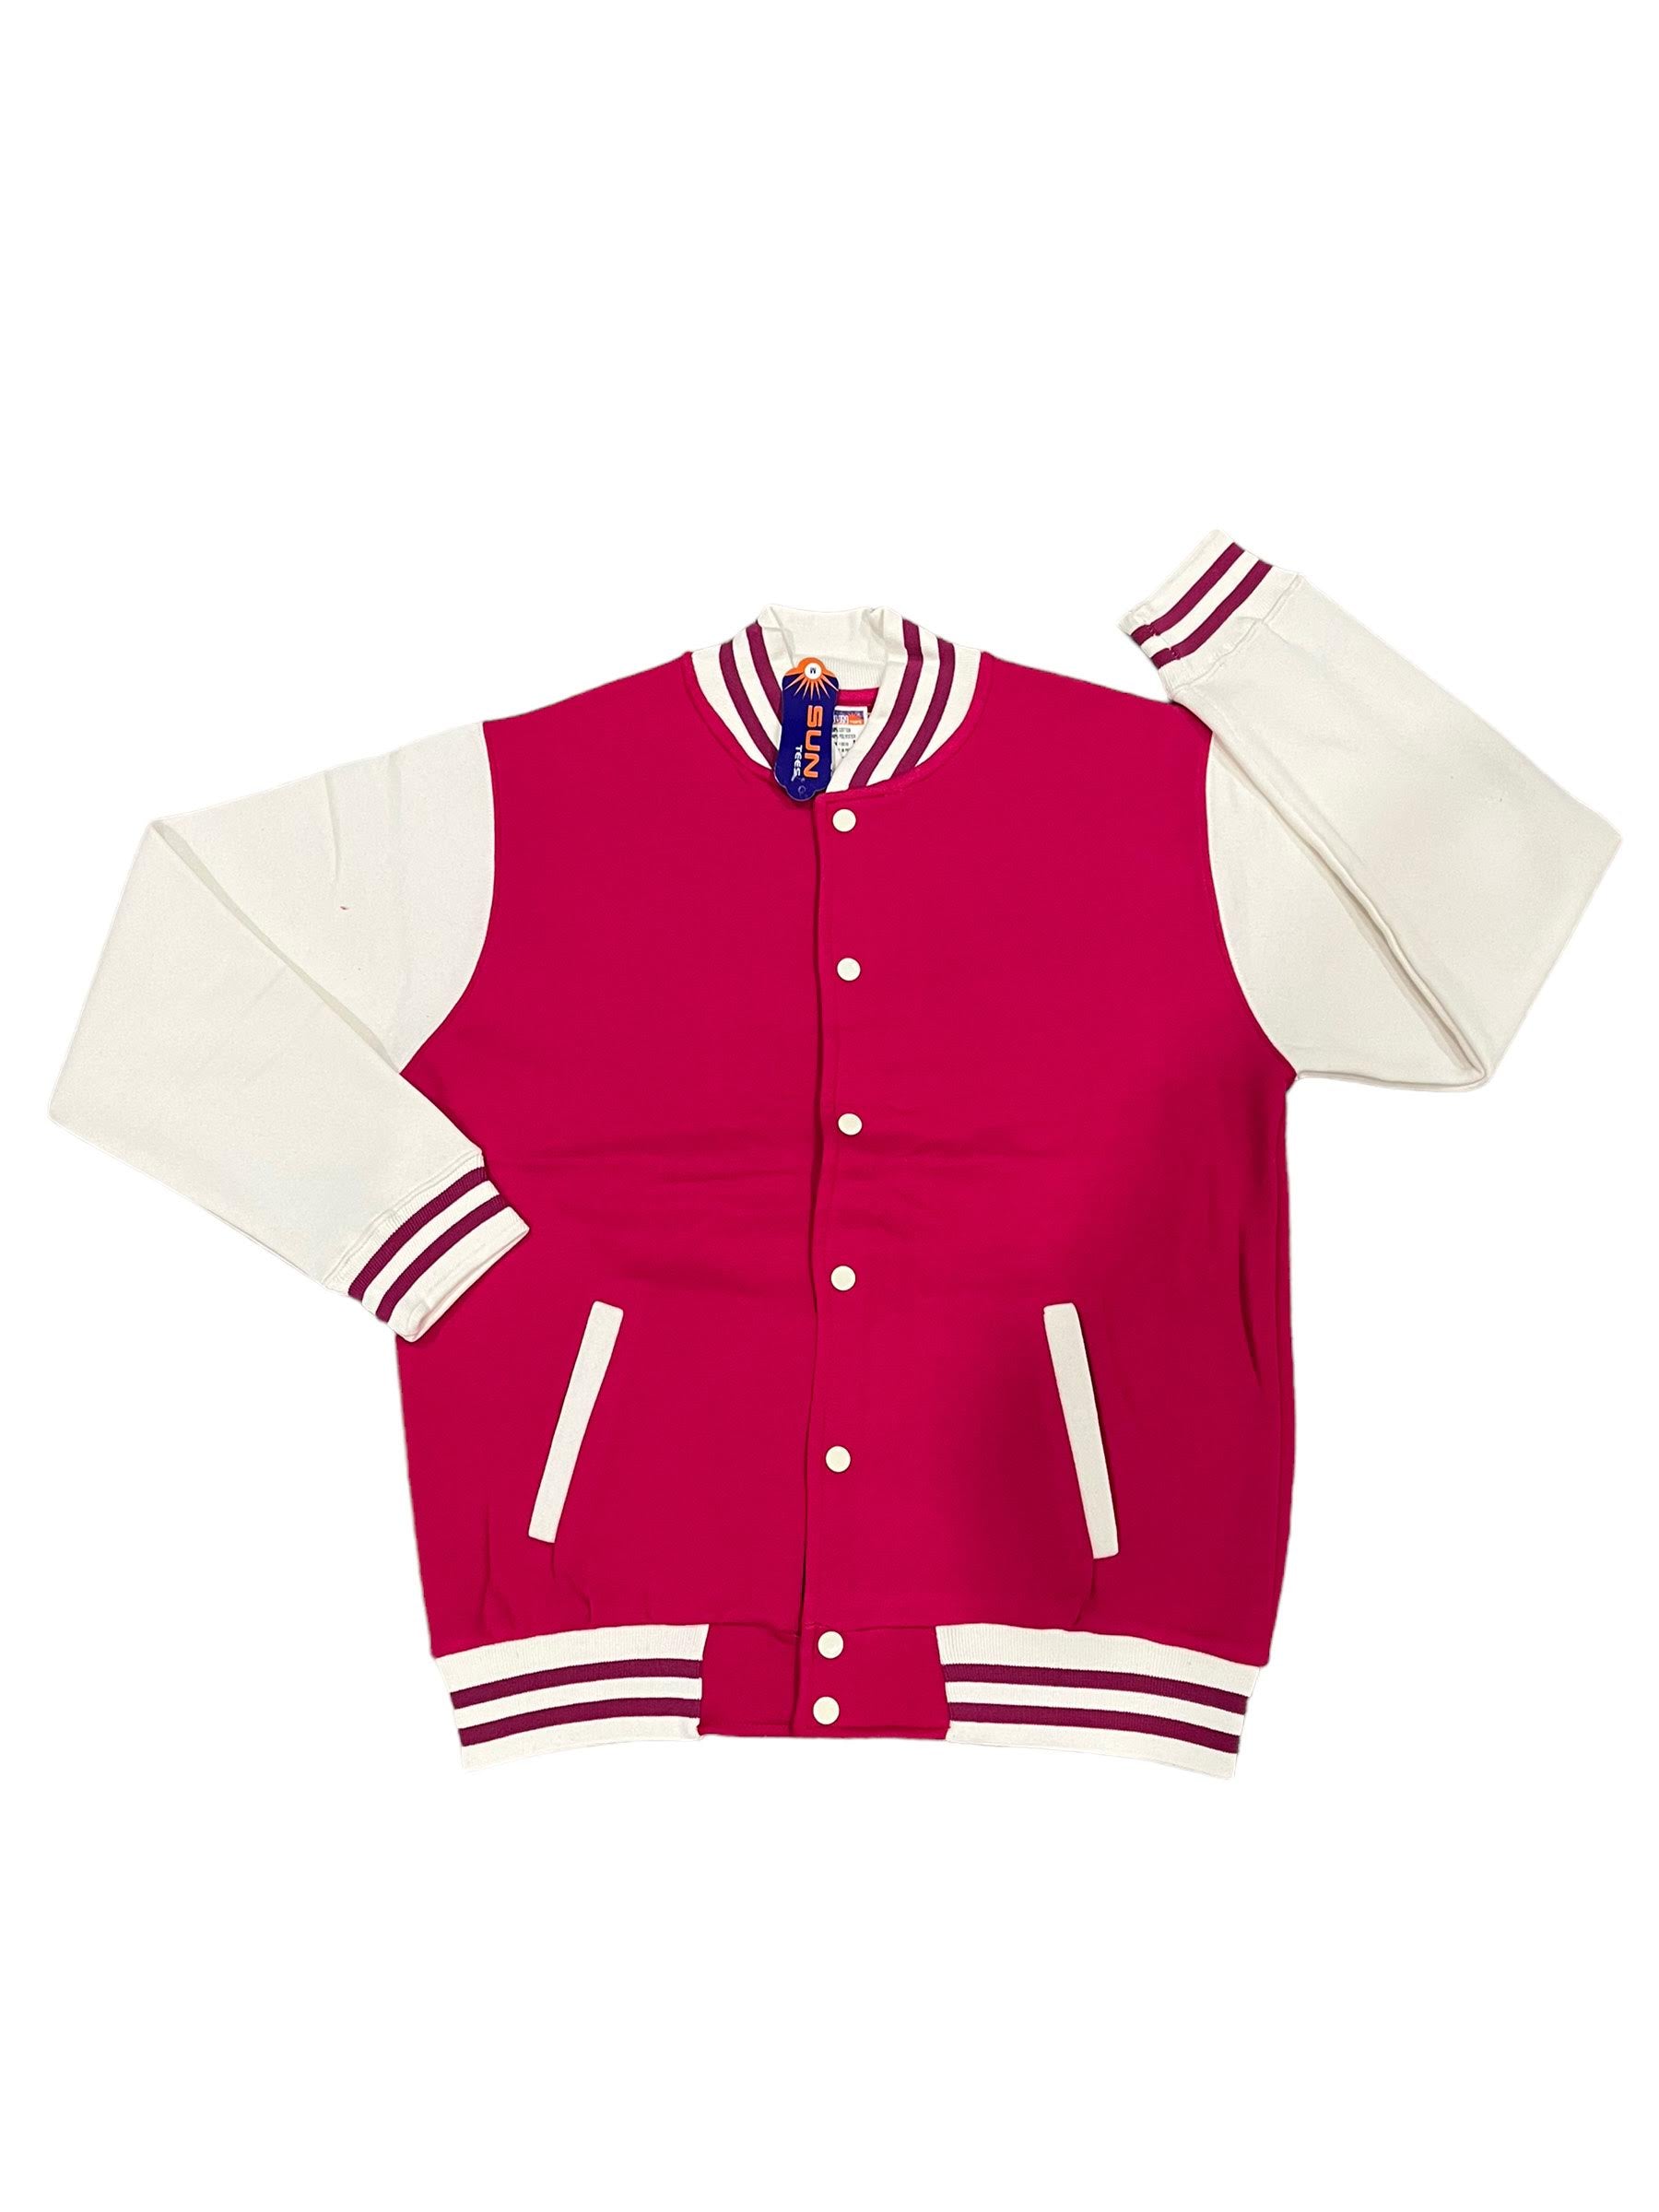 Hot pink/White Fleece Varsity Jacket 